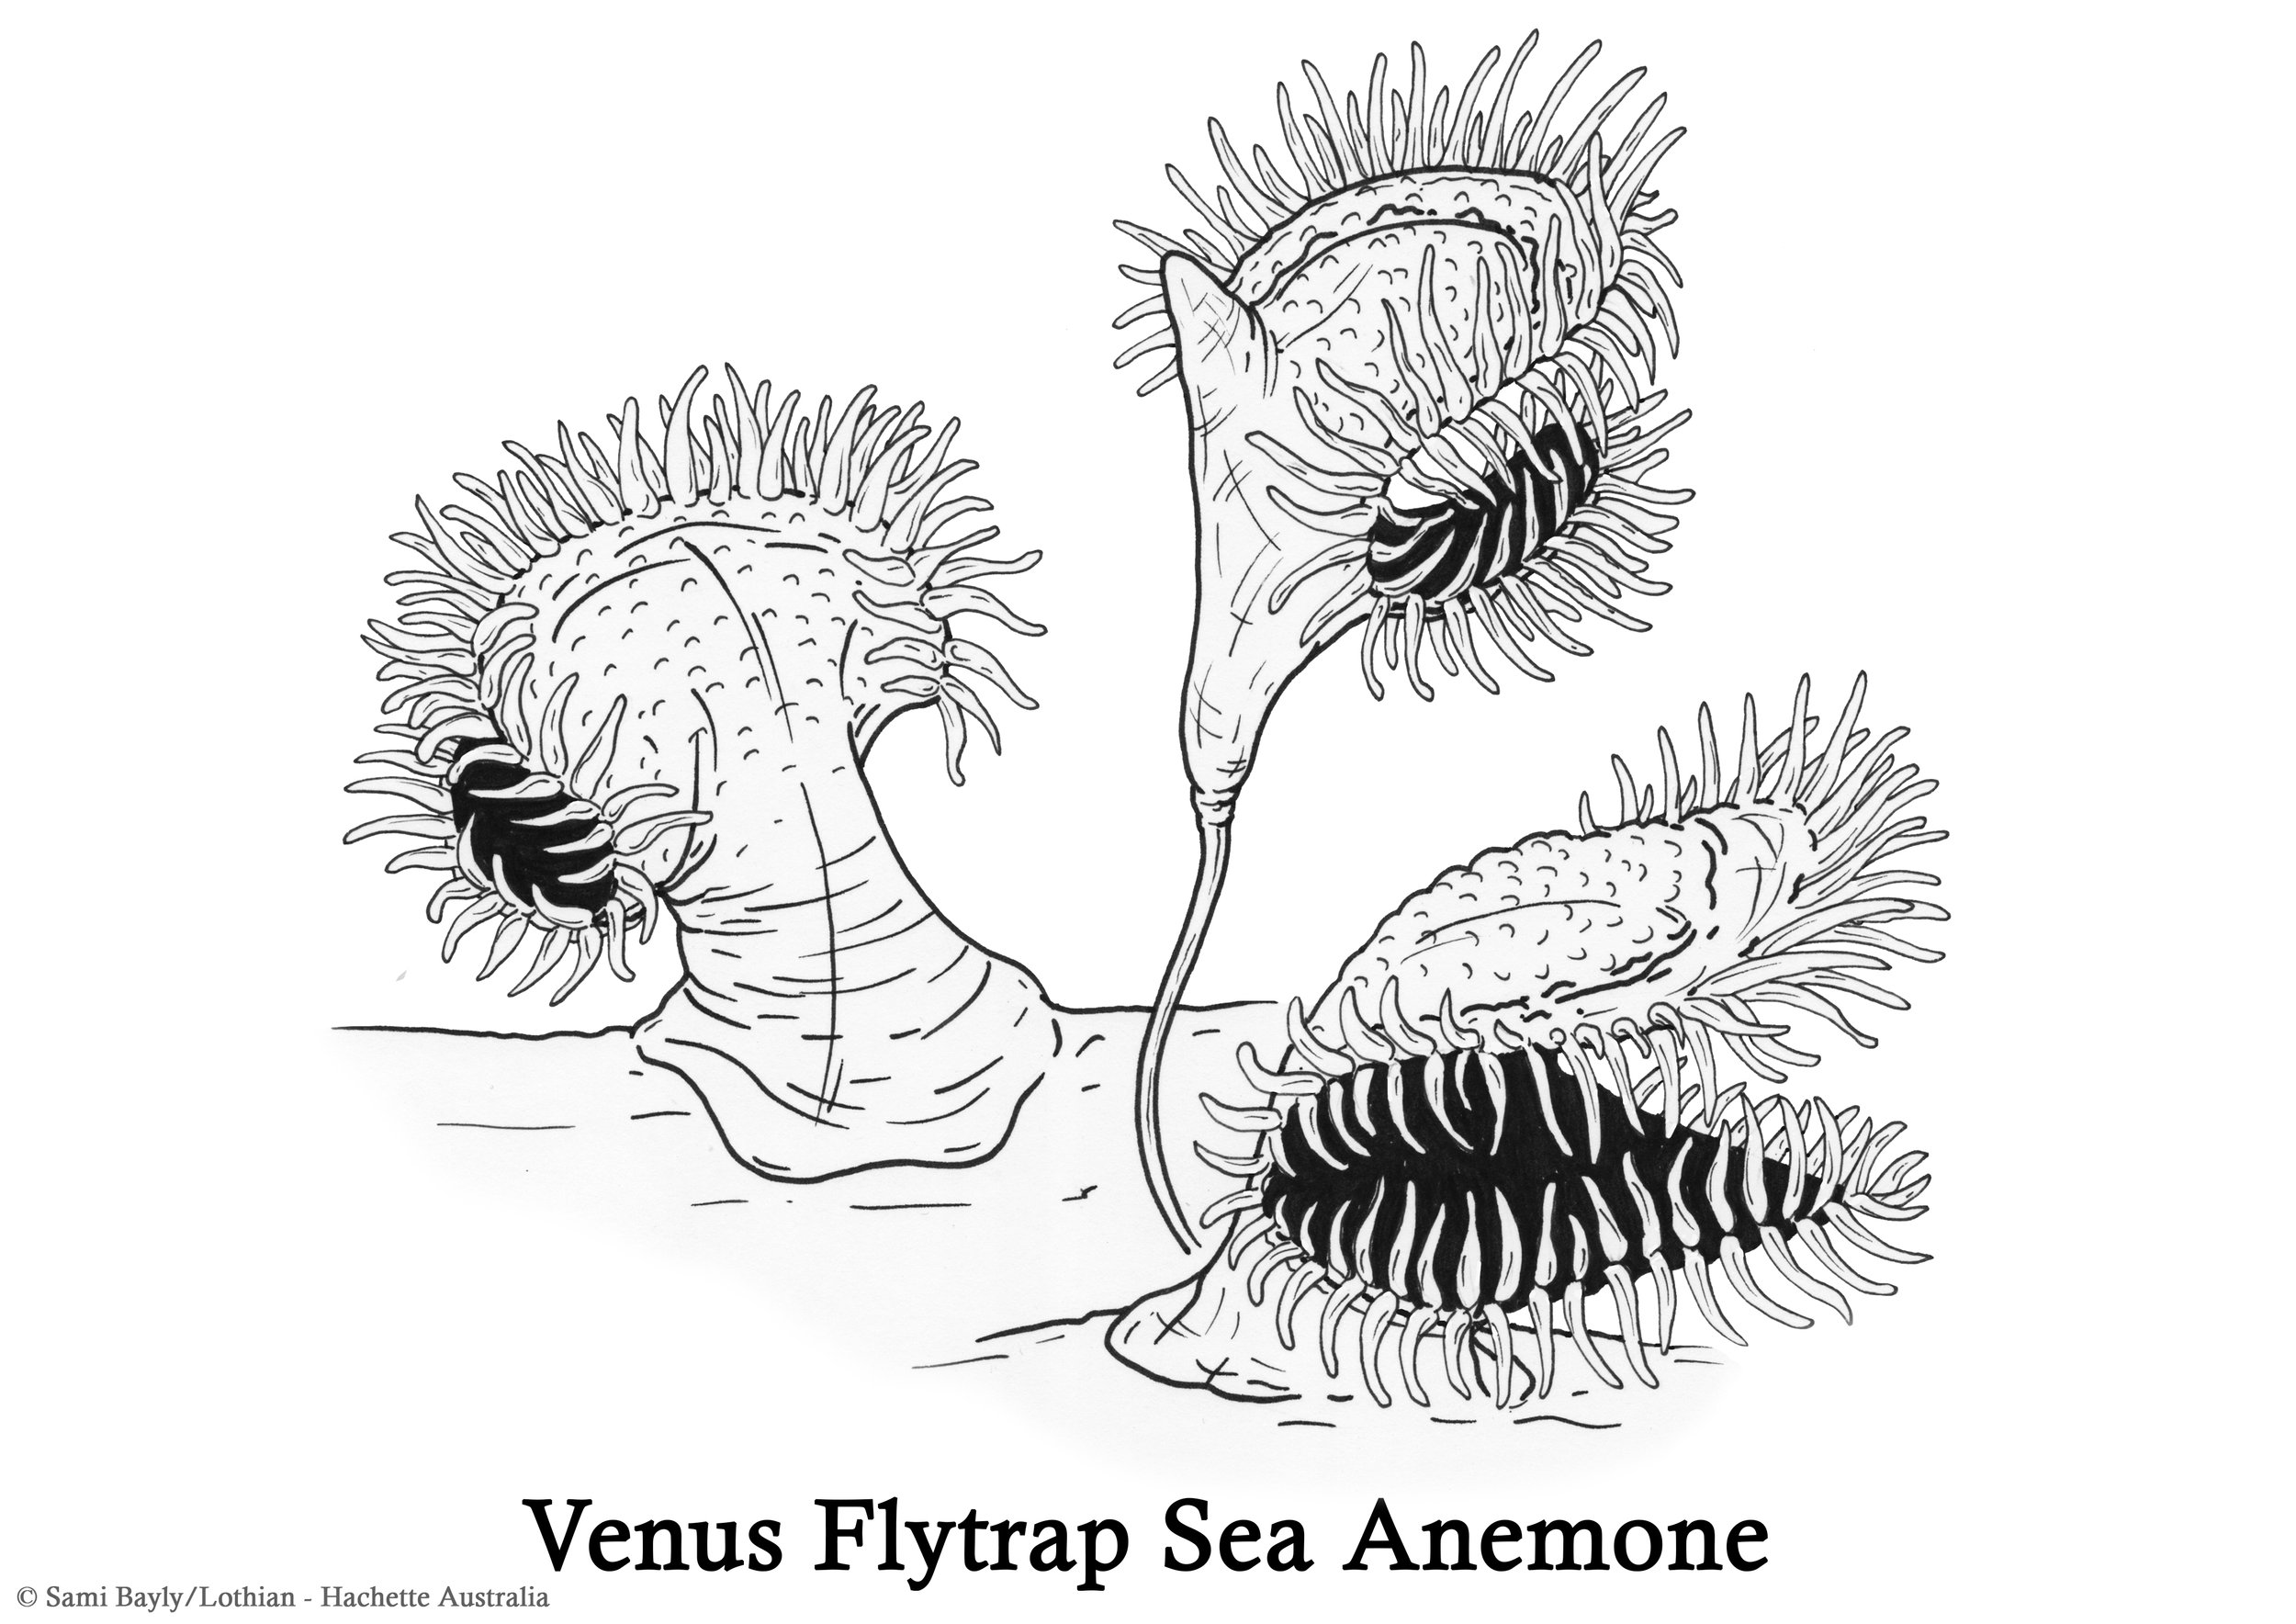 Venus Flytrap Sea Anemone Line Drawing.jpg